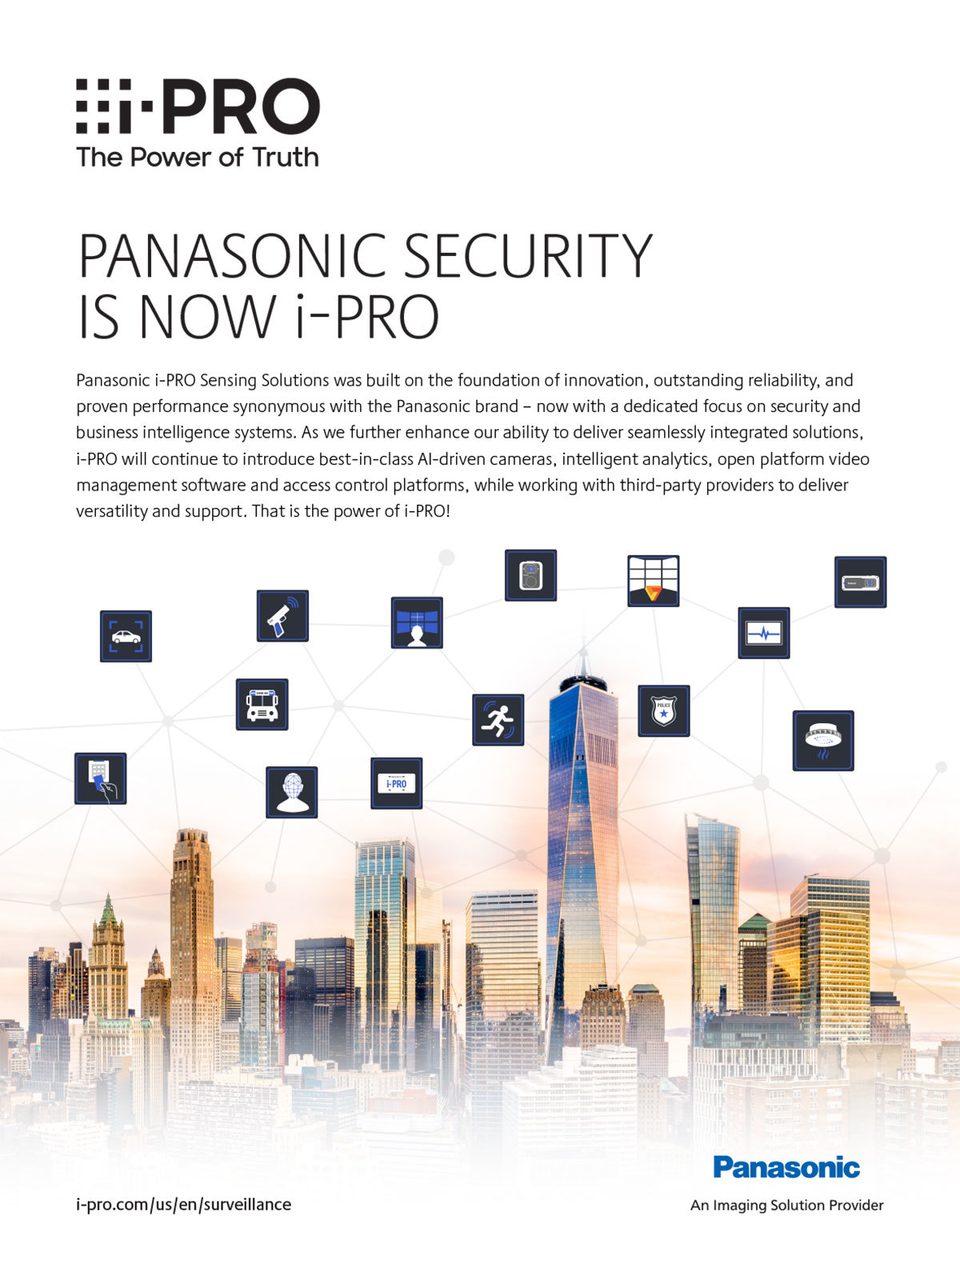 Panasonic advertisement